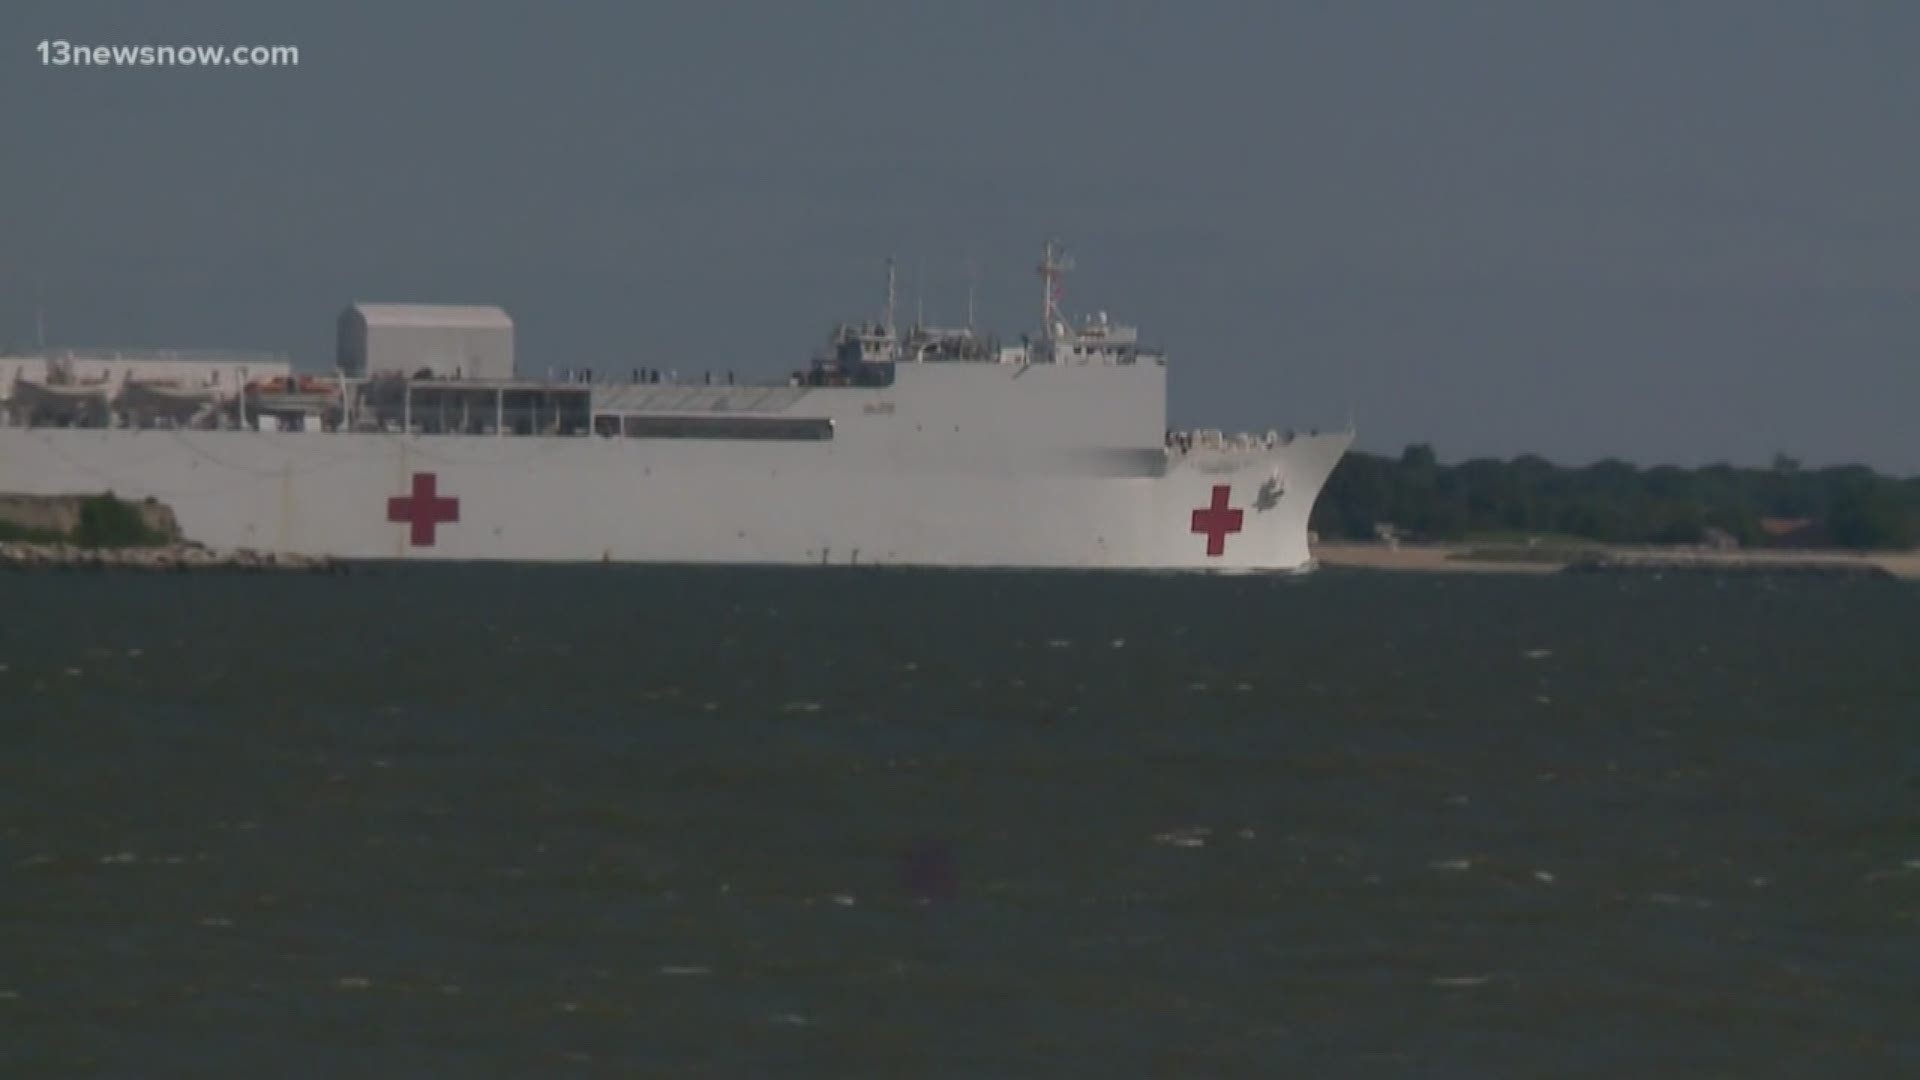 Hospital ship USNS Comfort leaves on 5-month deployment